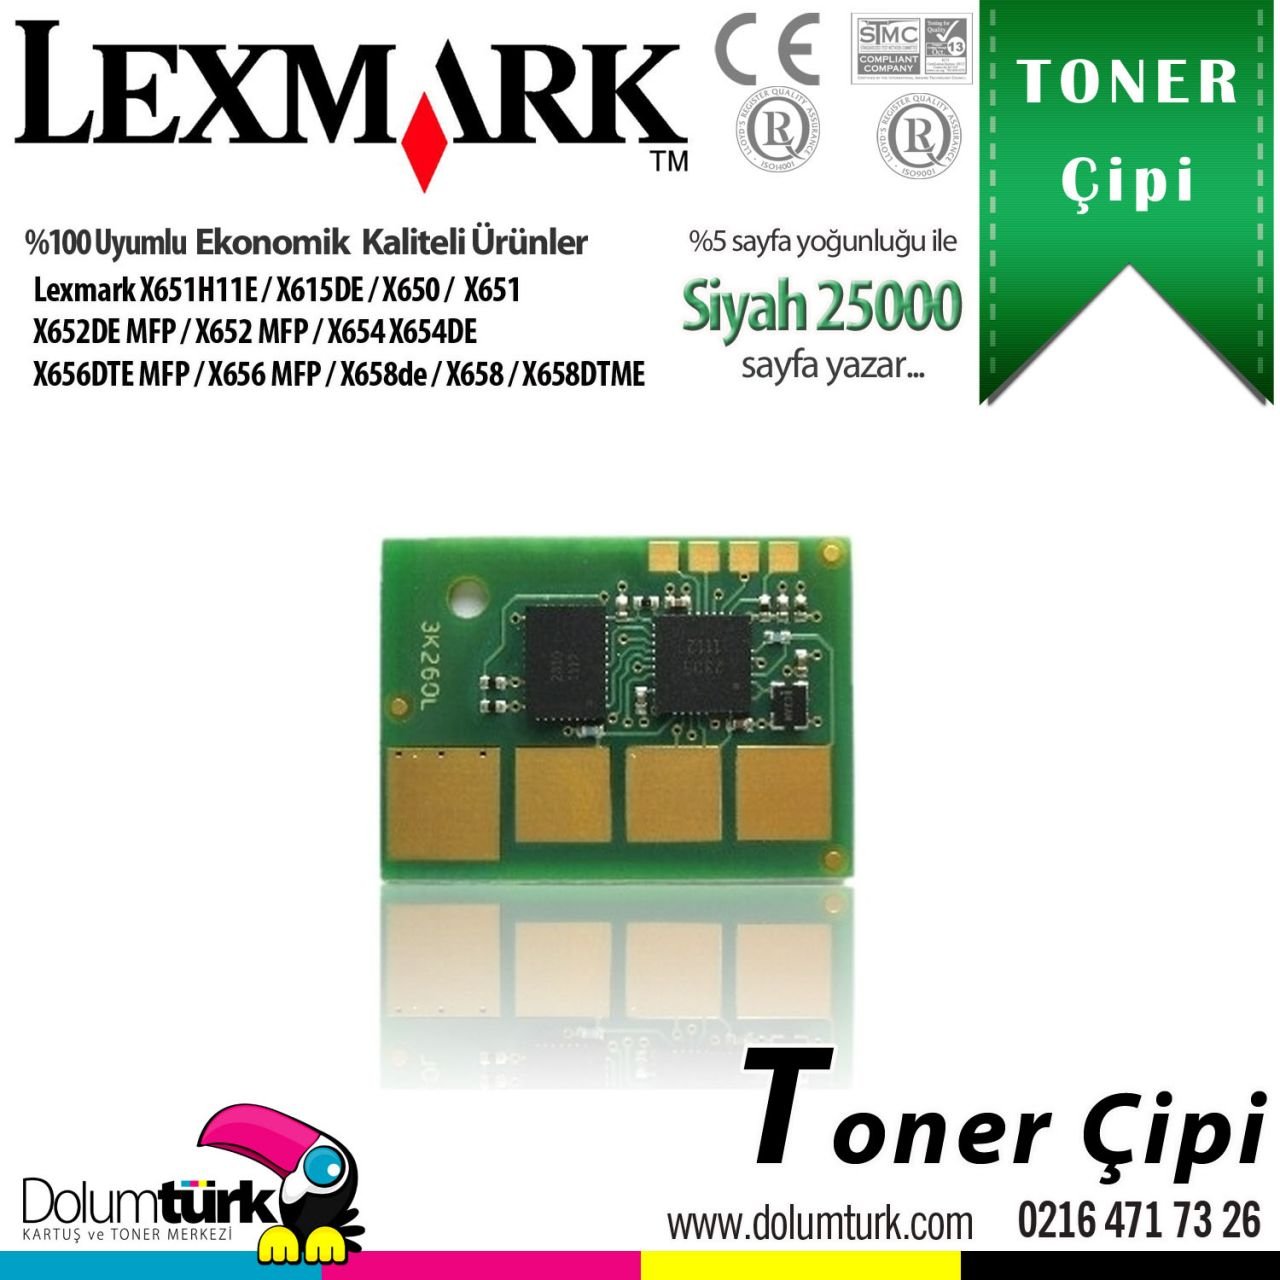 Lexmark X651H11E / X650 / X651 / X652 / X654 / X656 / X658 Toner Çipi 25K